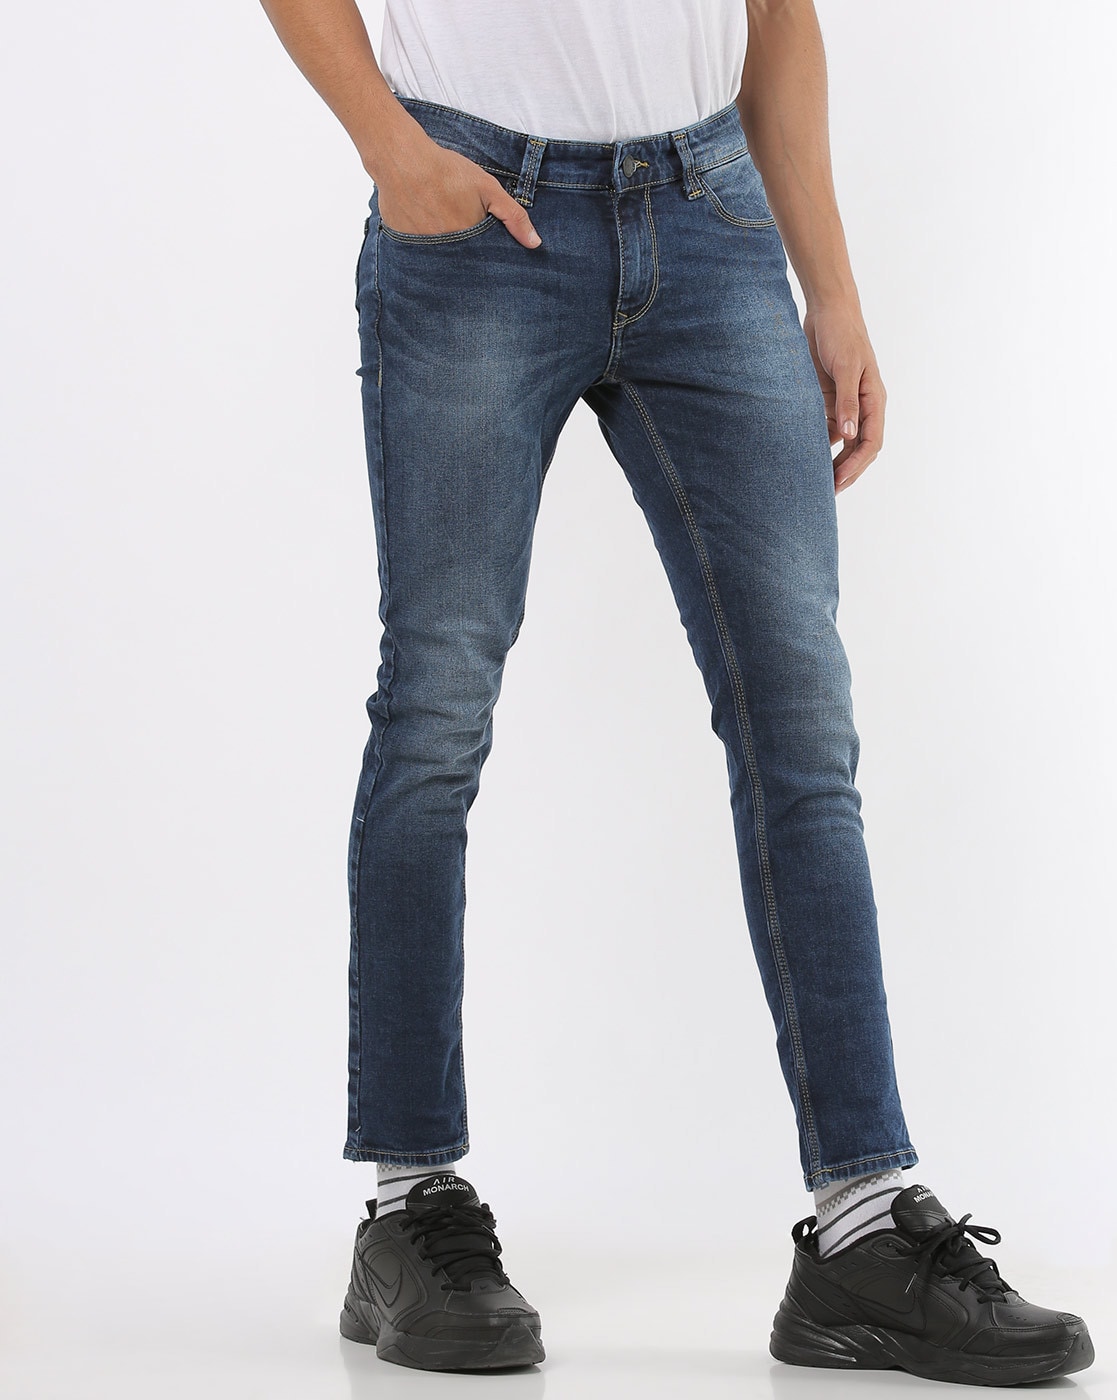 mens dark blue jeans skinny